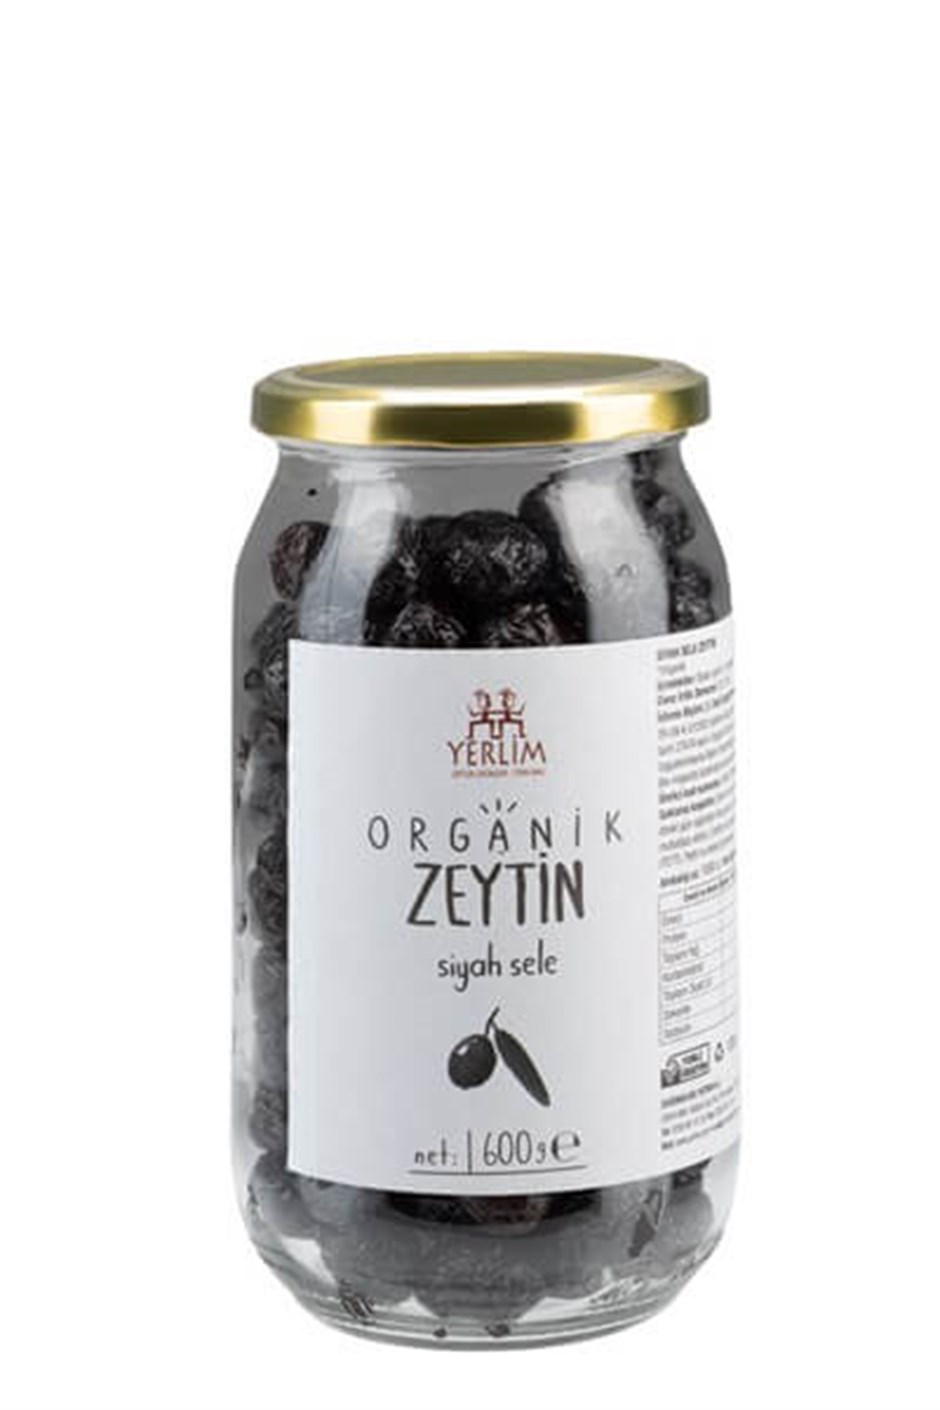 Organik Zeytin Siyah Sele Vegan Glutensiz (600gr) (Yerlim Organik) I  entazem.com